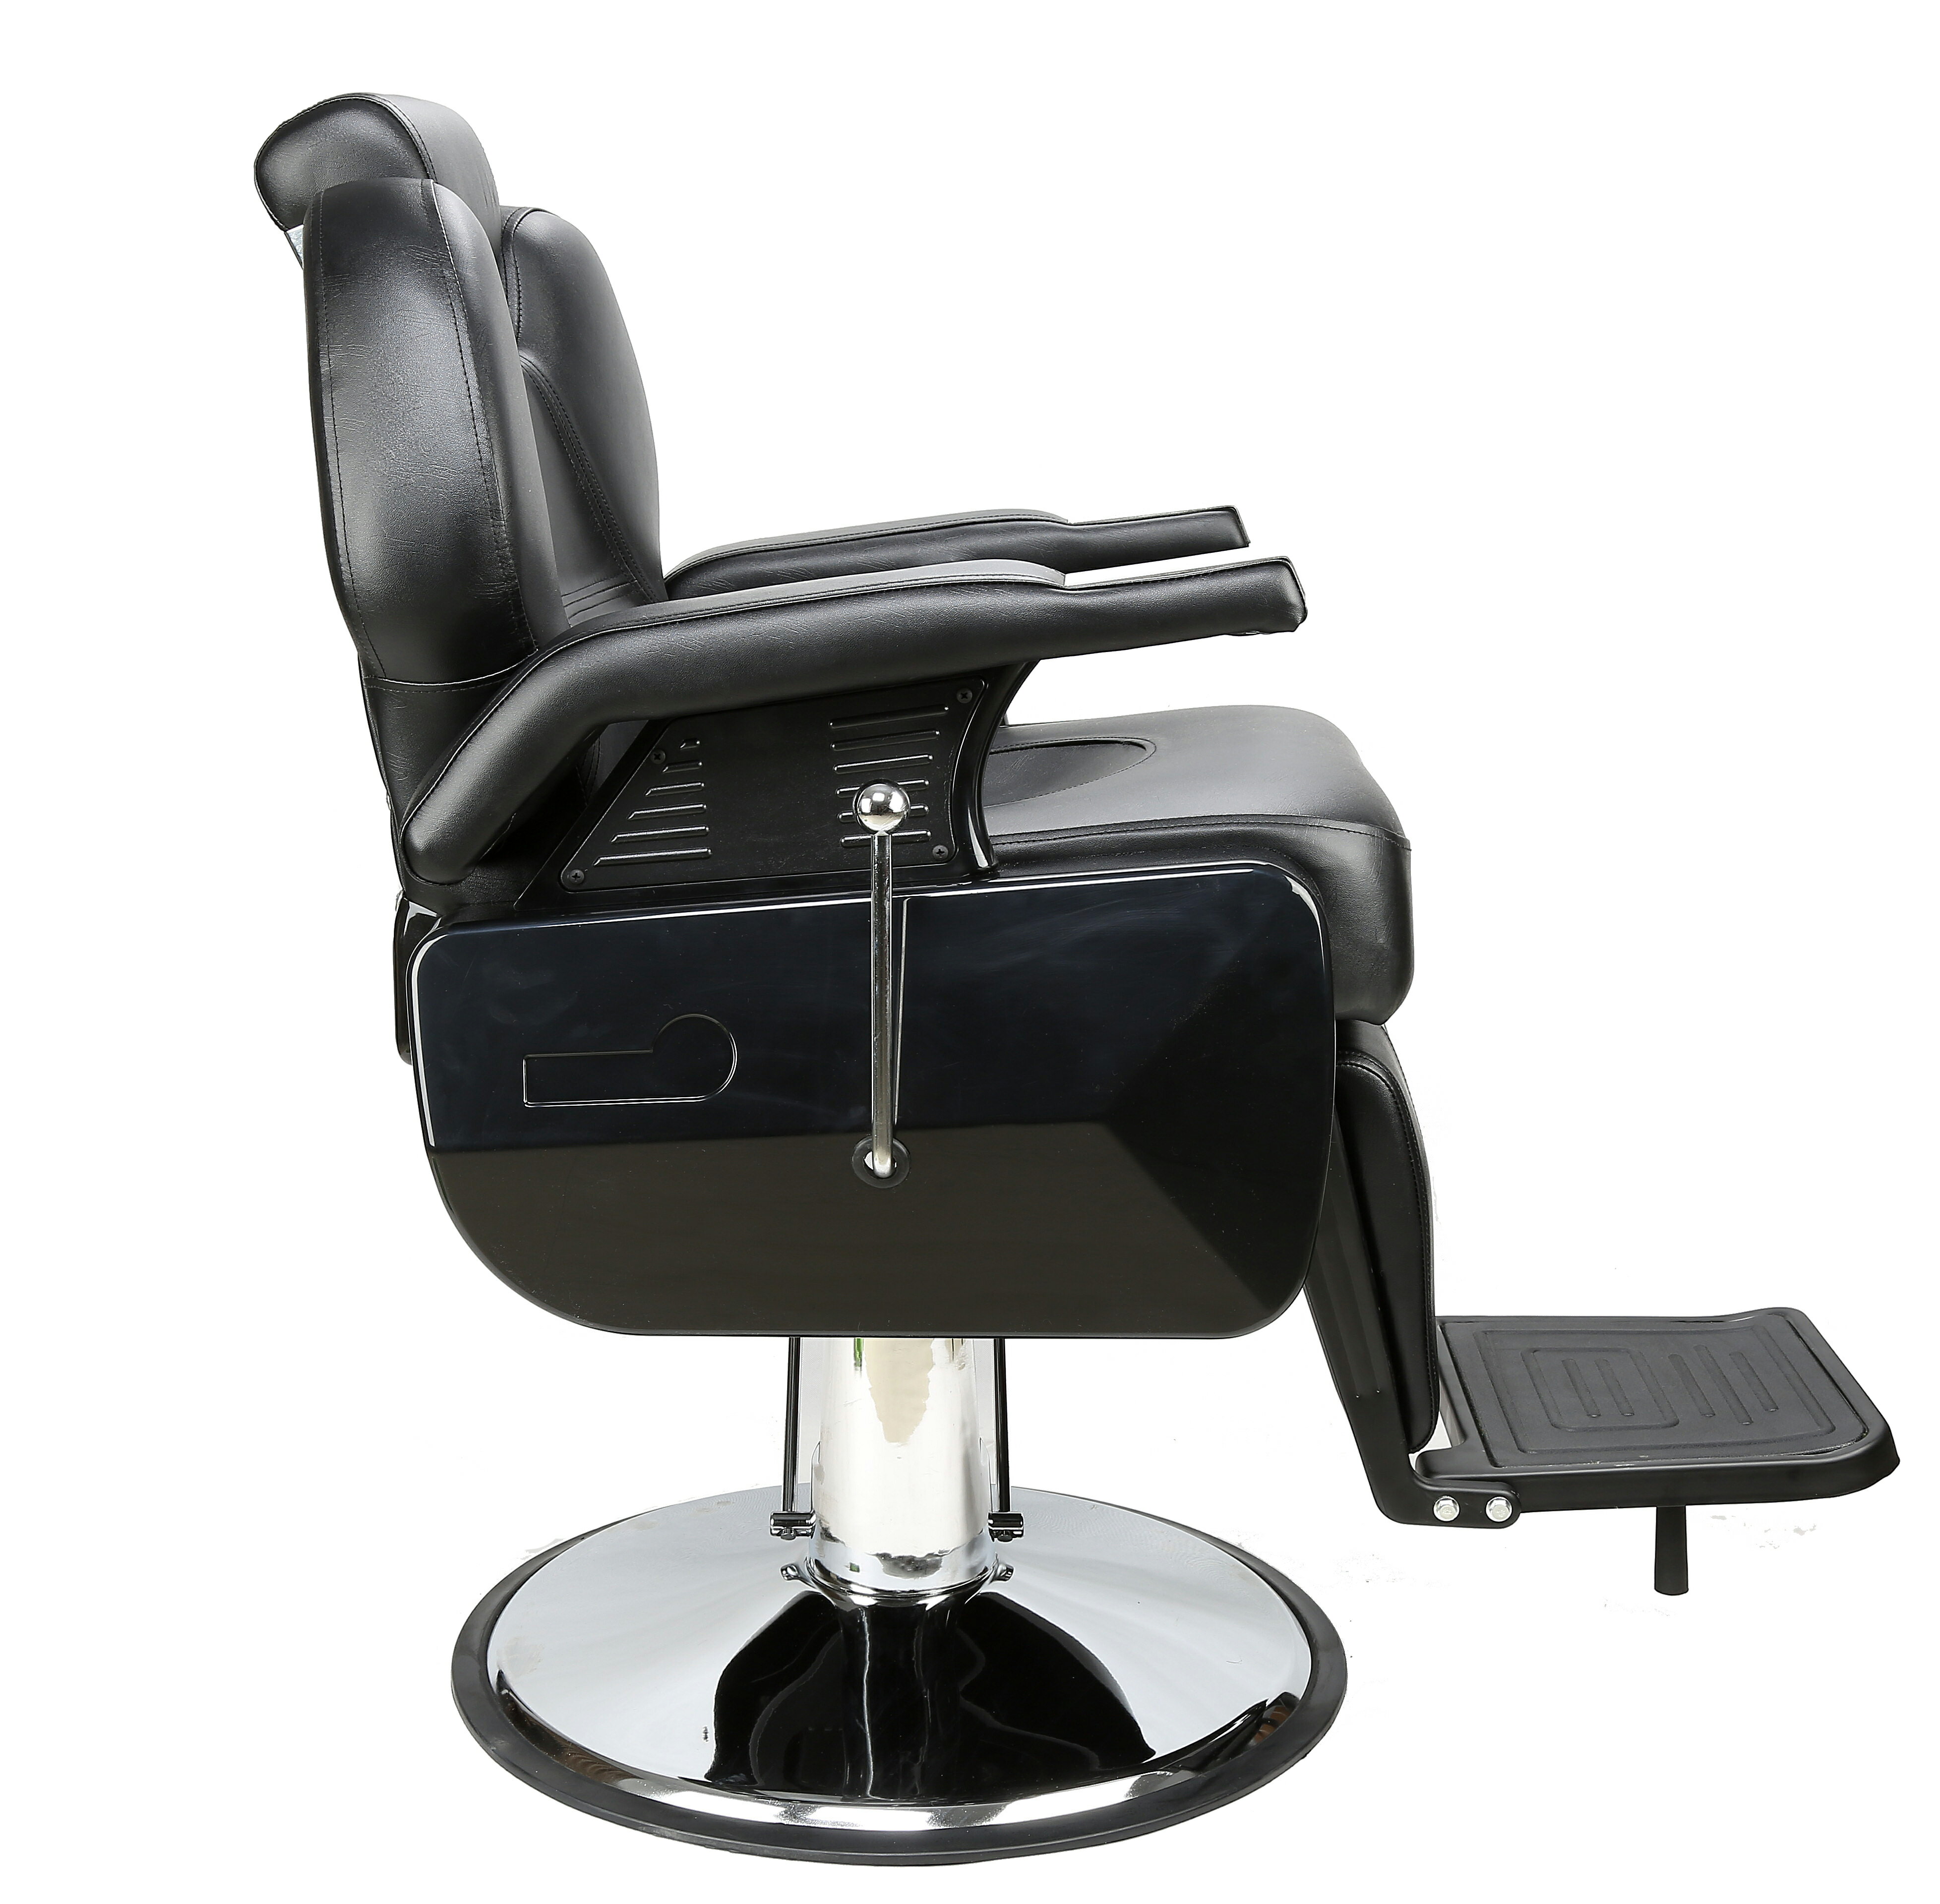 Mcombo Barberpub All Purpose Hydraulic Recline Salon Beauty Spa Styling Barber Chair Black